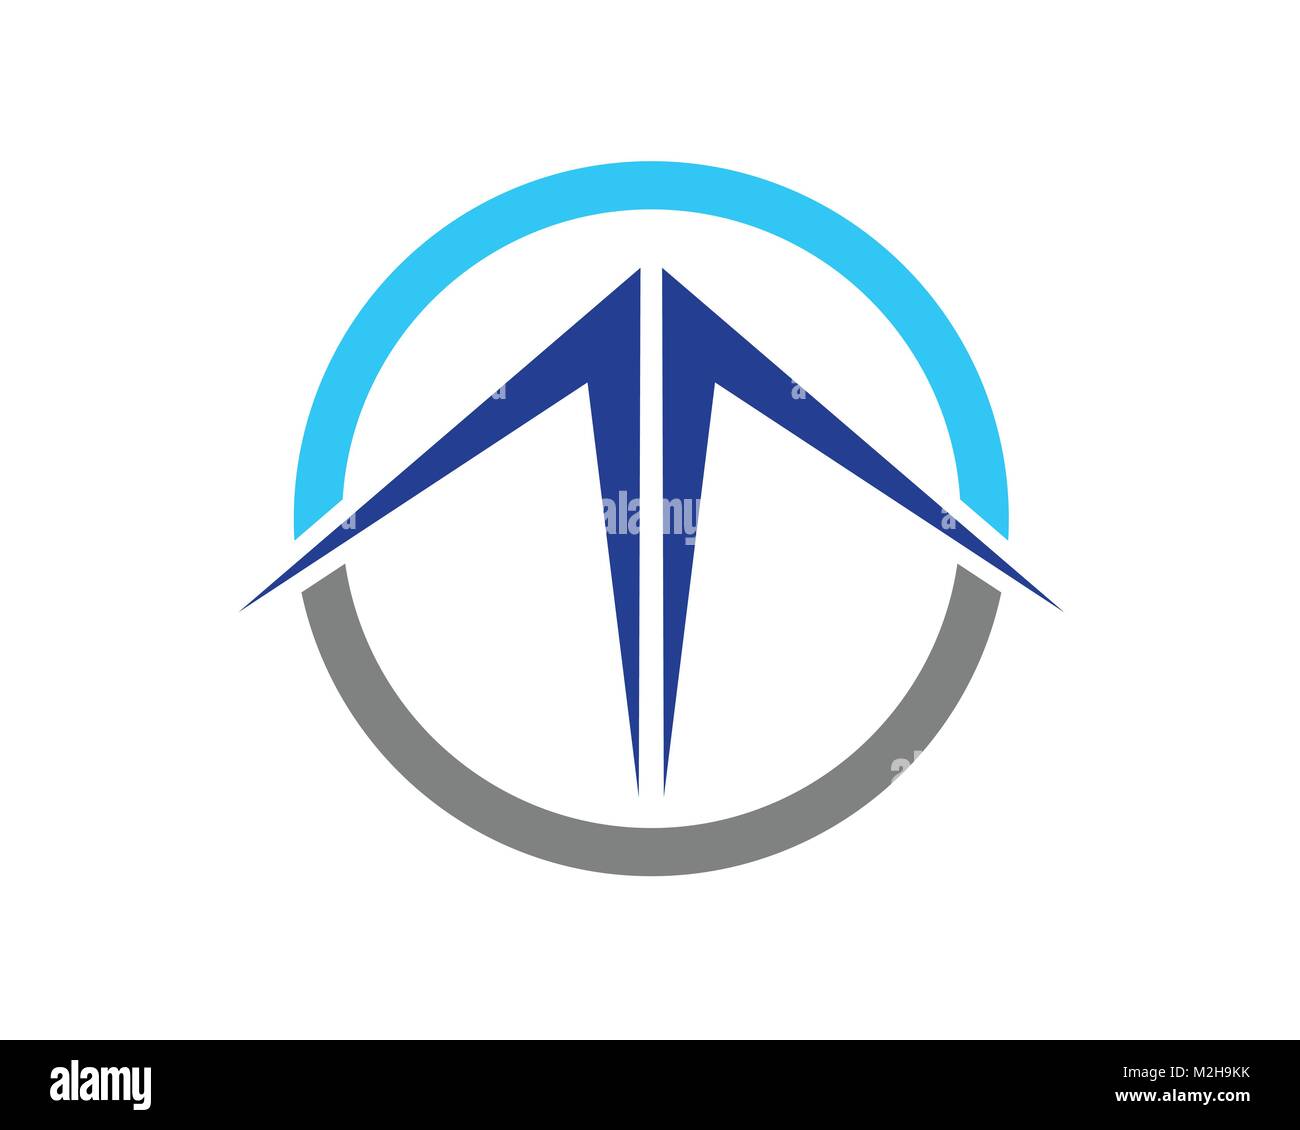 abstract-blue-mountain-circle-emblem-stock-vektorgrafik-alamy